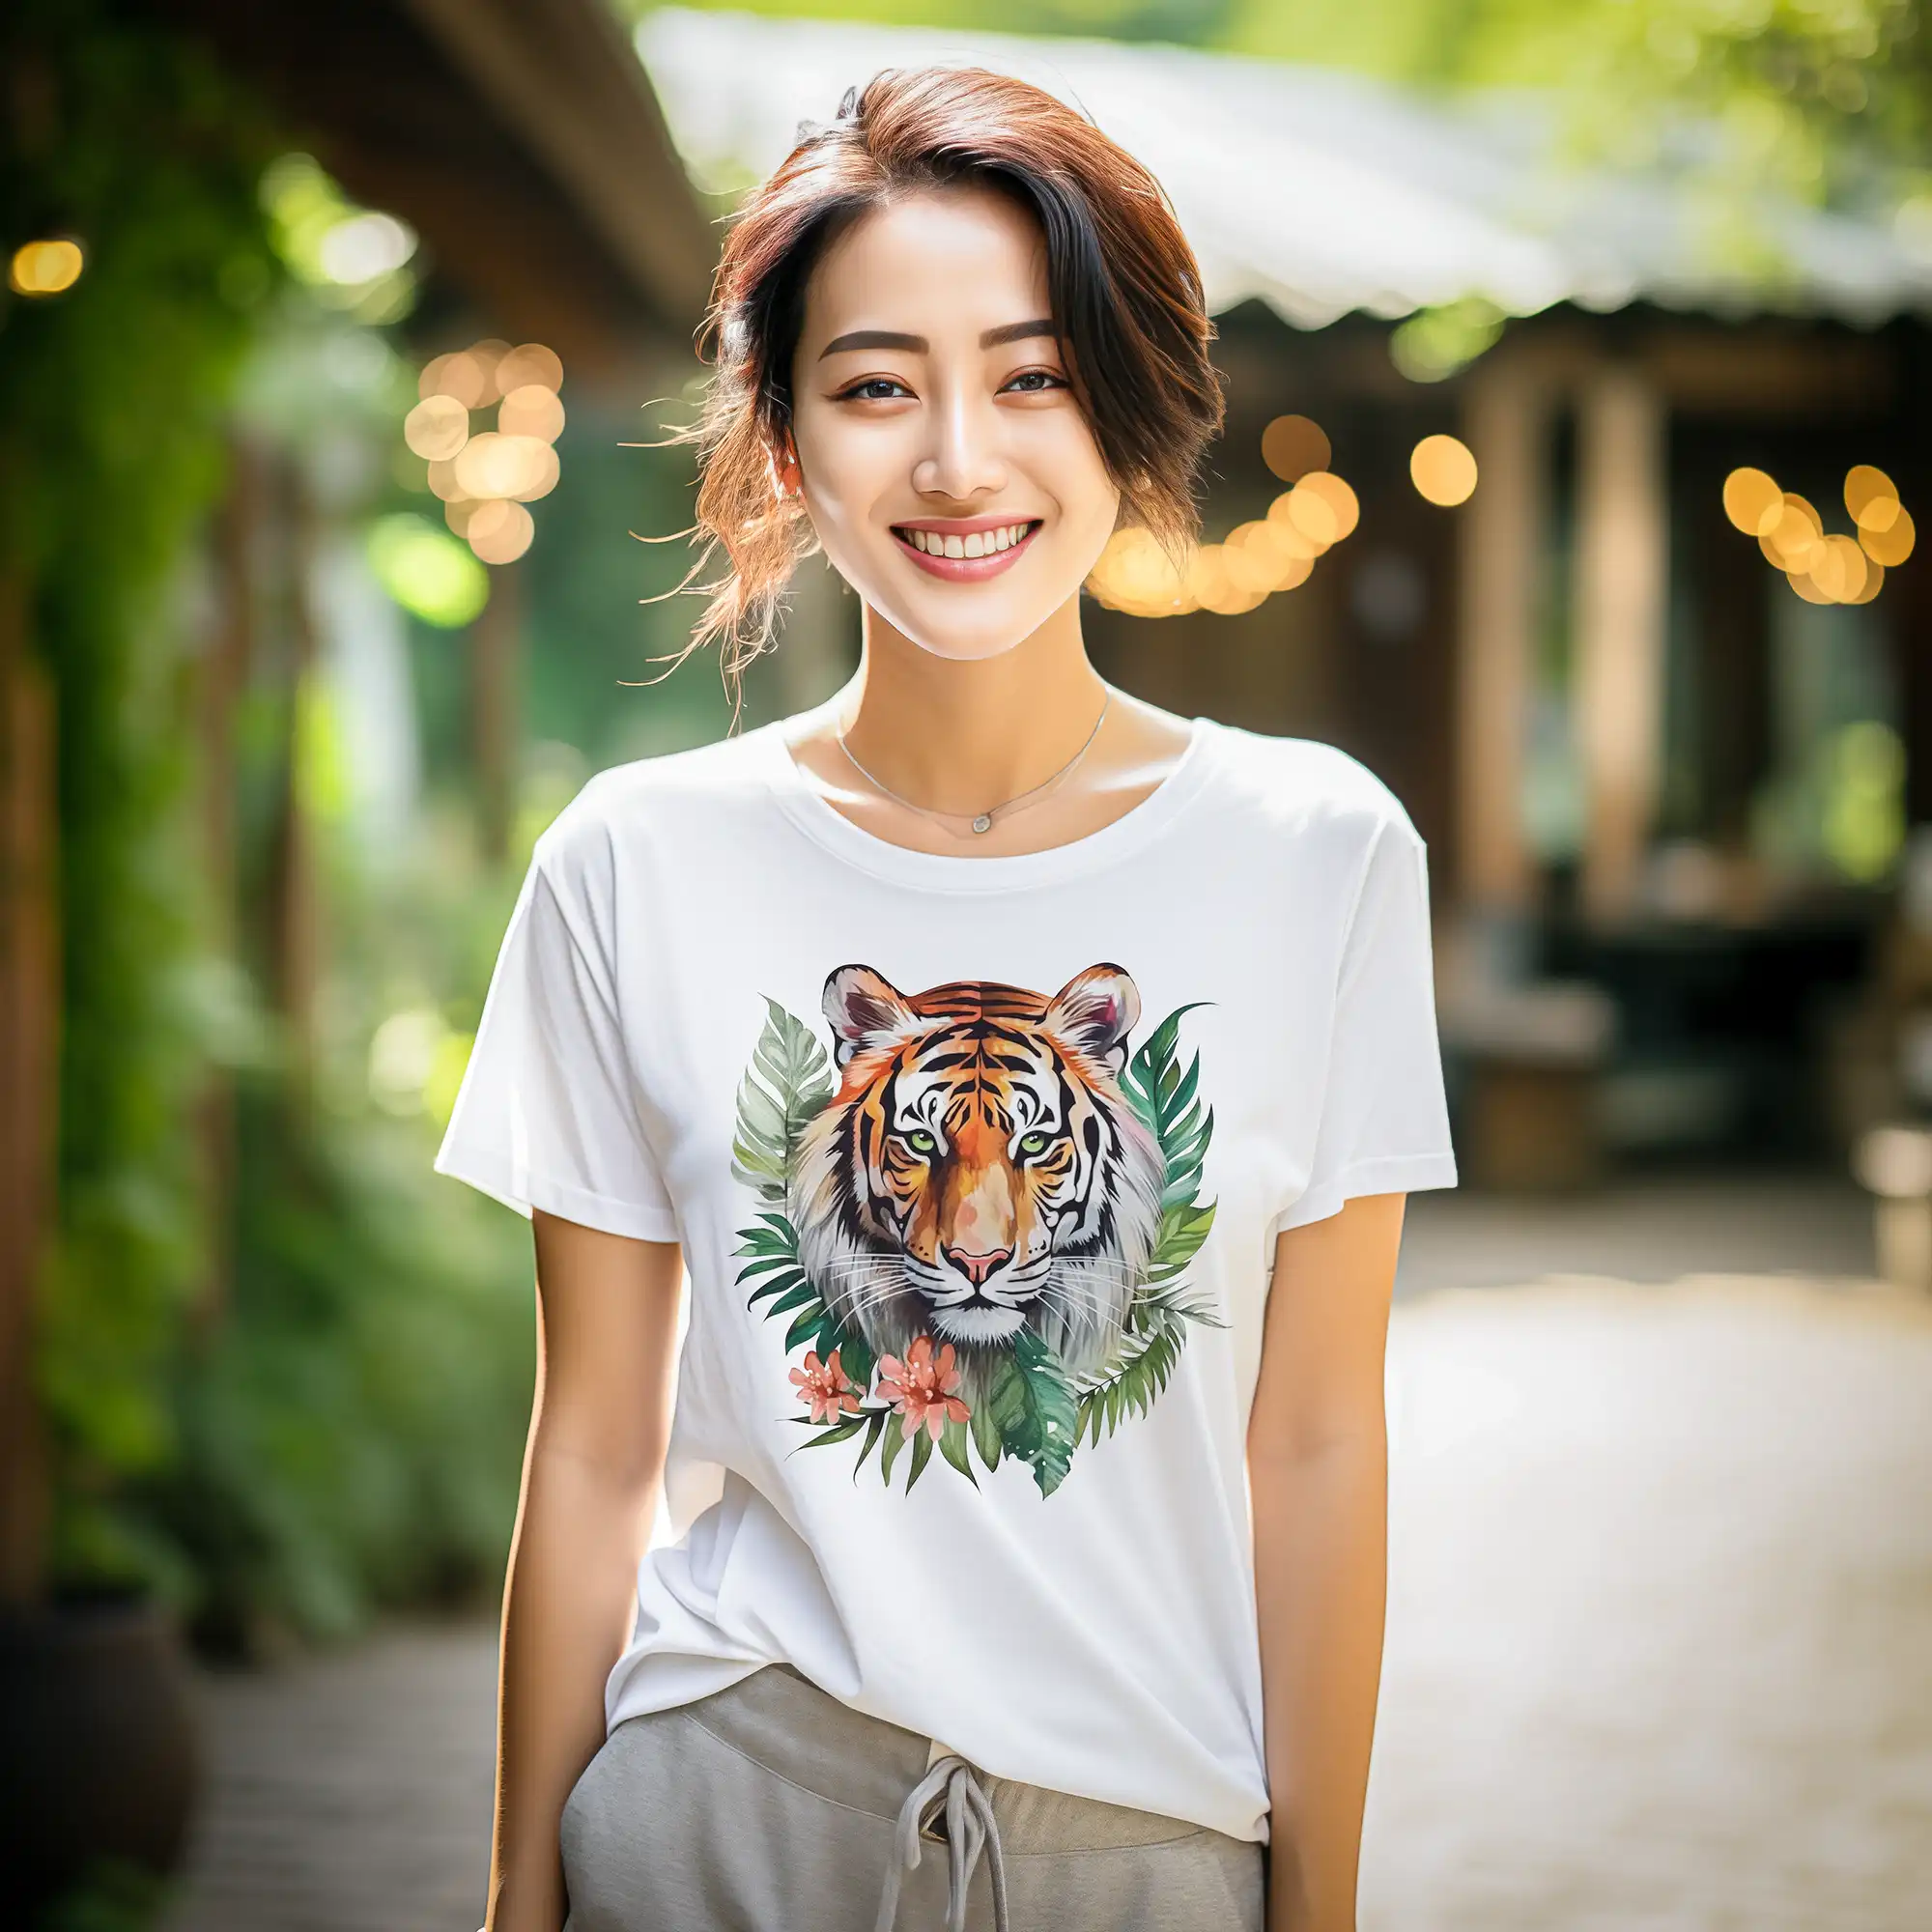 Tiger-t-shirt_mockup_Copyright_Taijigate-com.